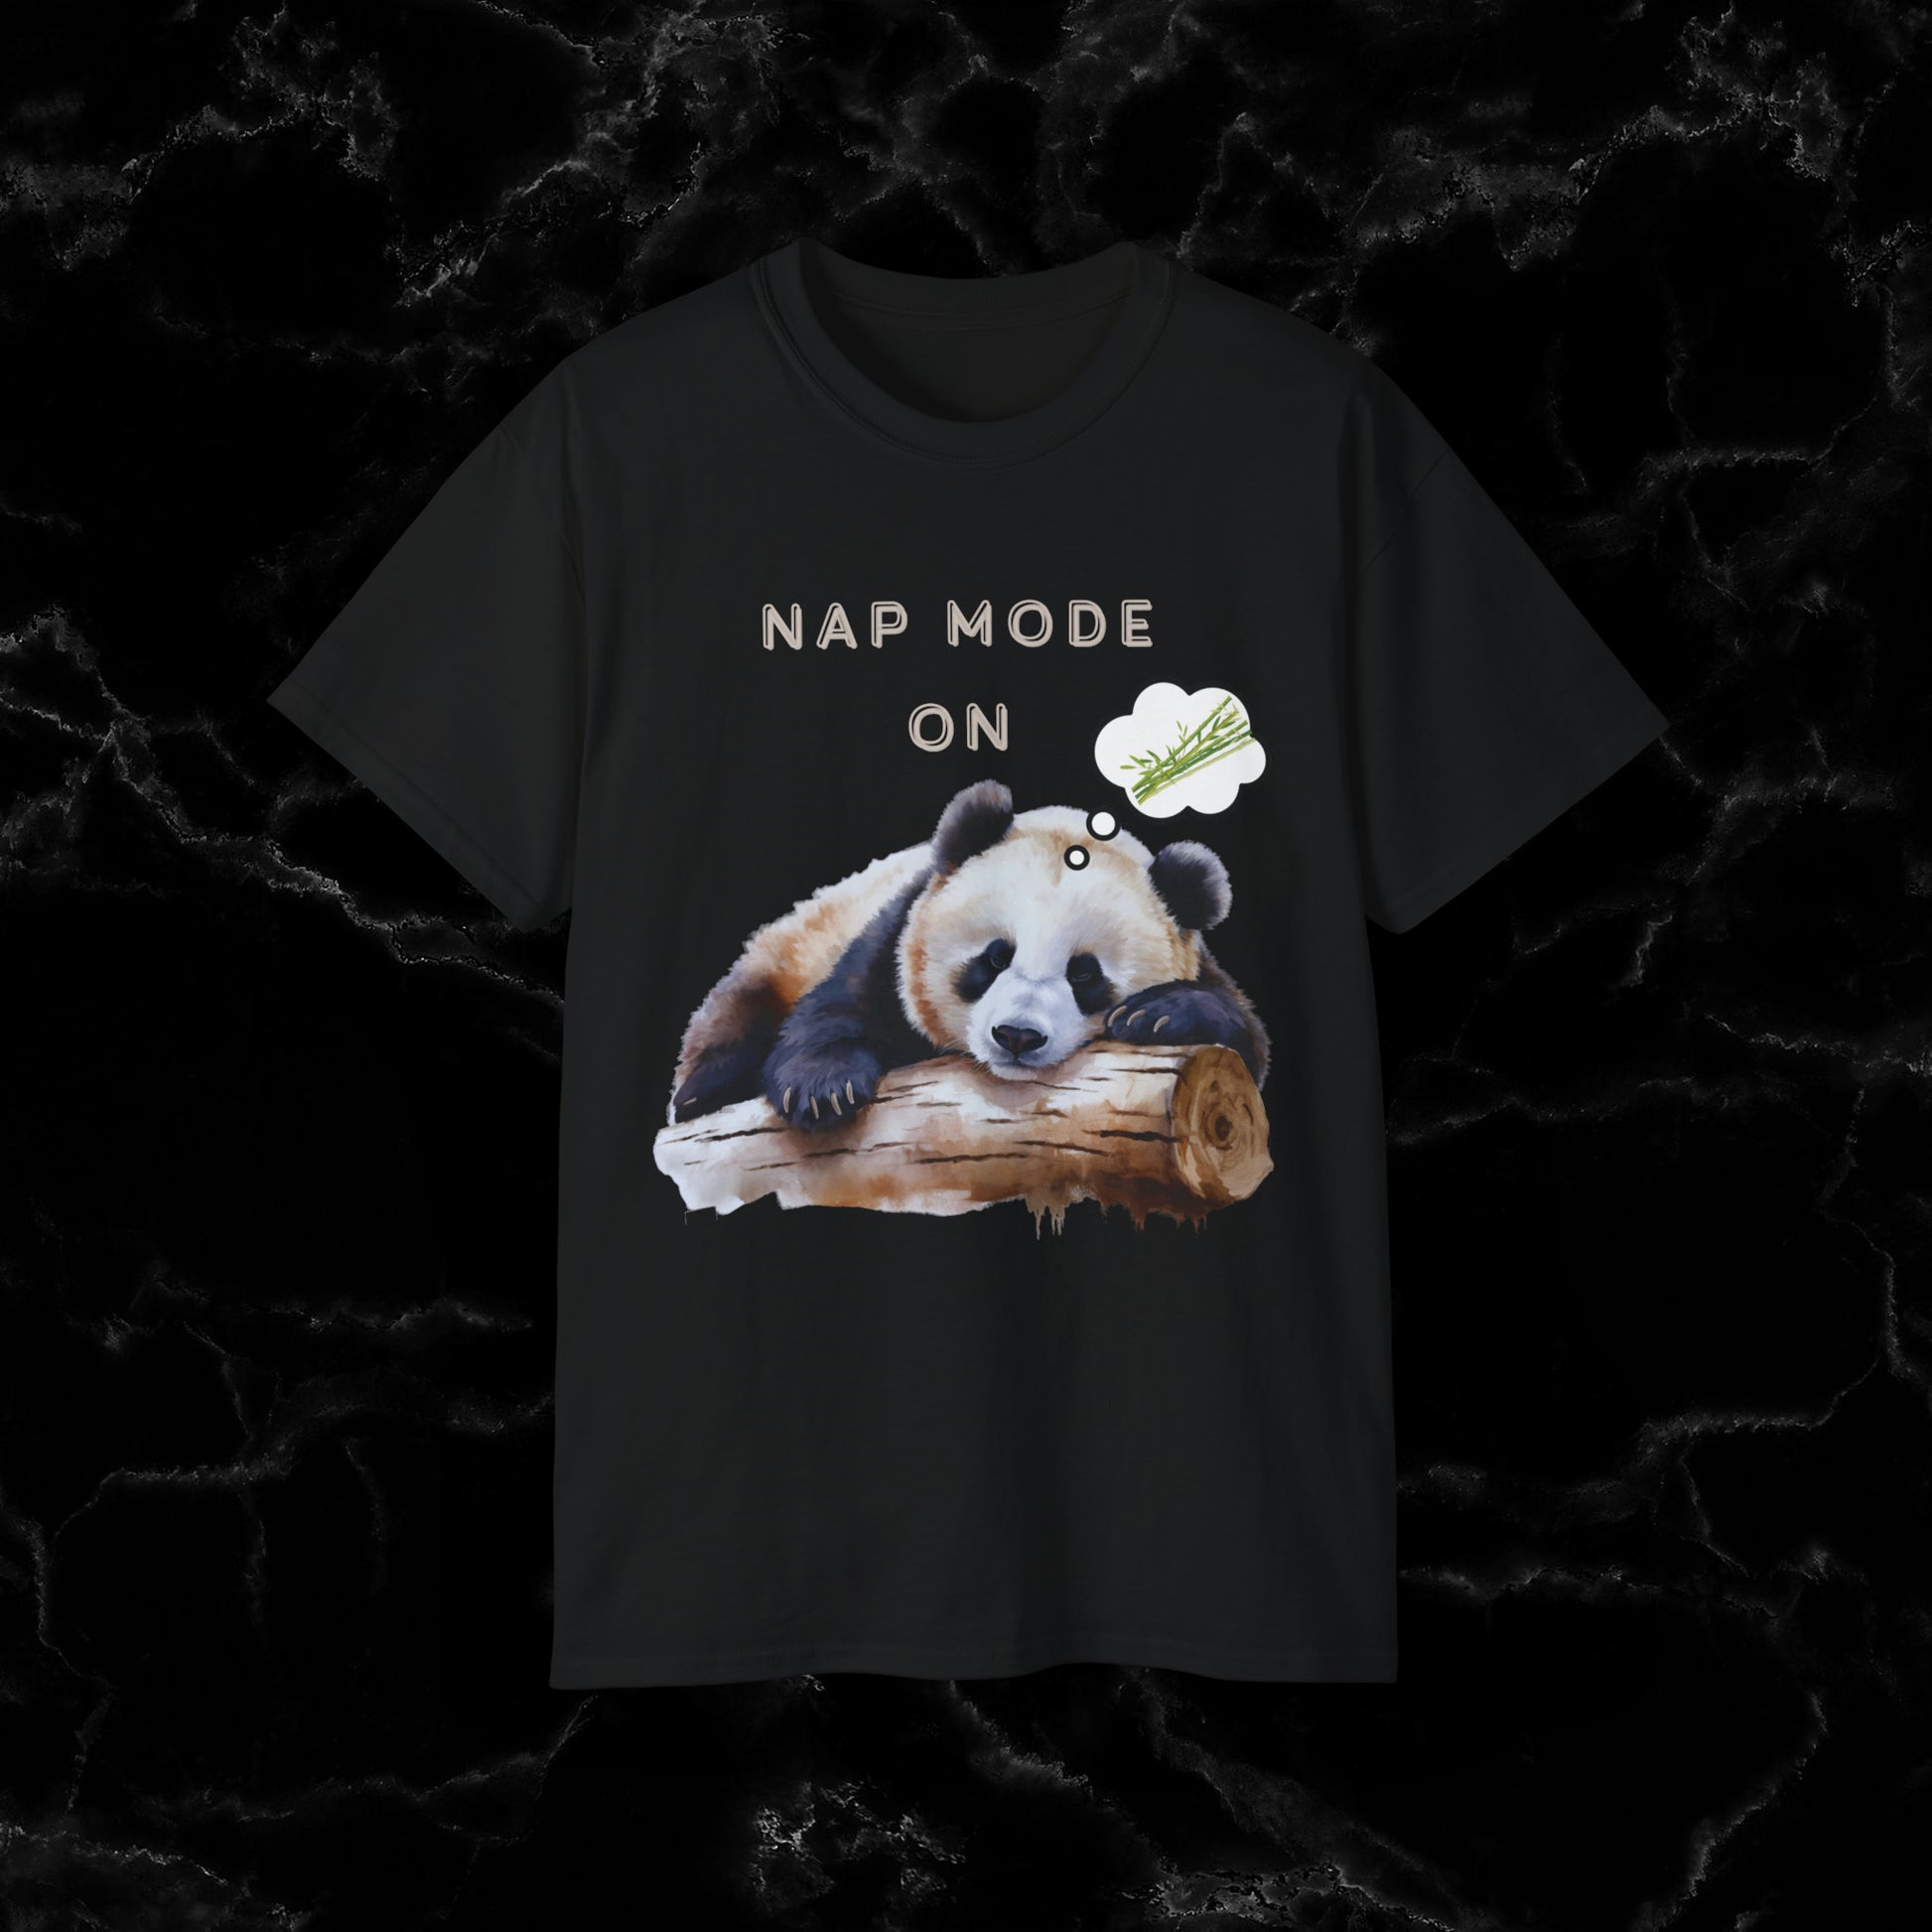 Nap Time Panda Unisex Funny Tee - Hilarious Panda Nap Mode On T-Shirt Black S 